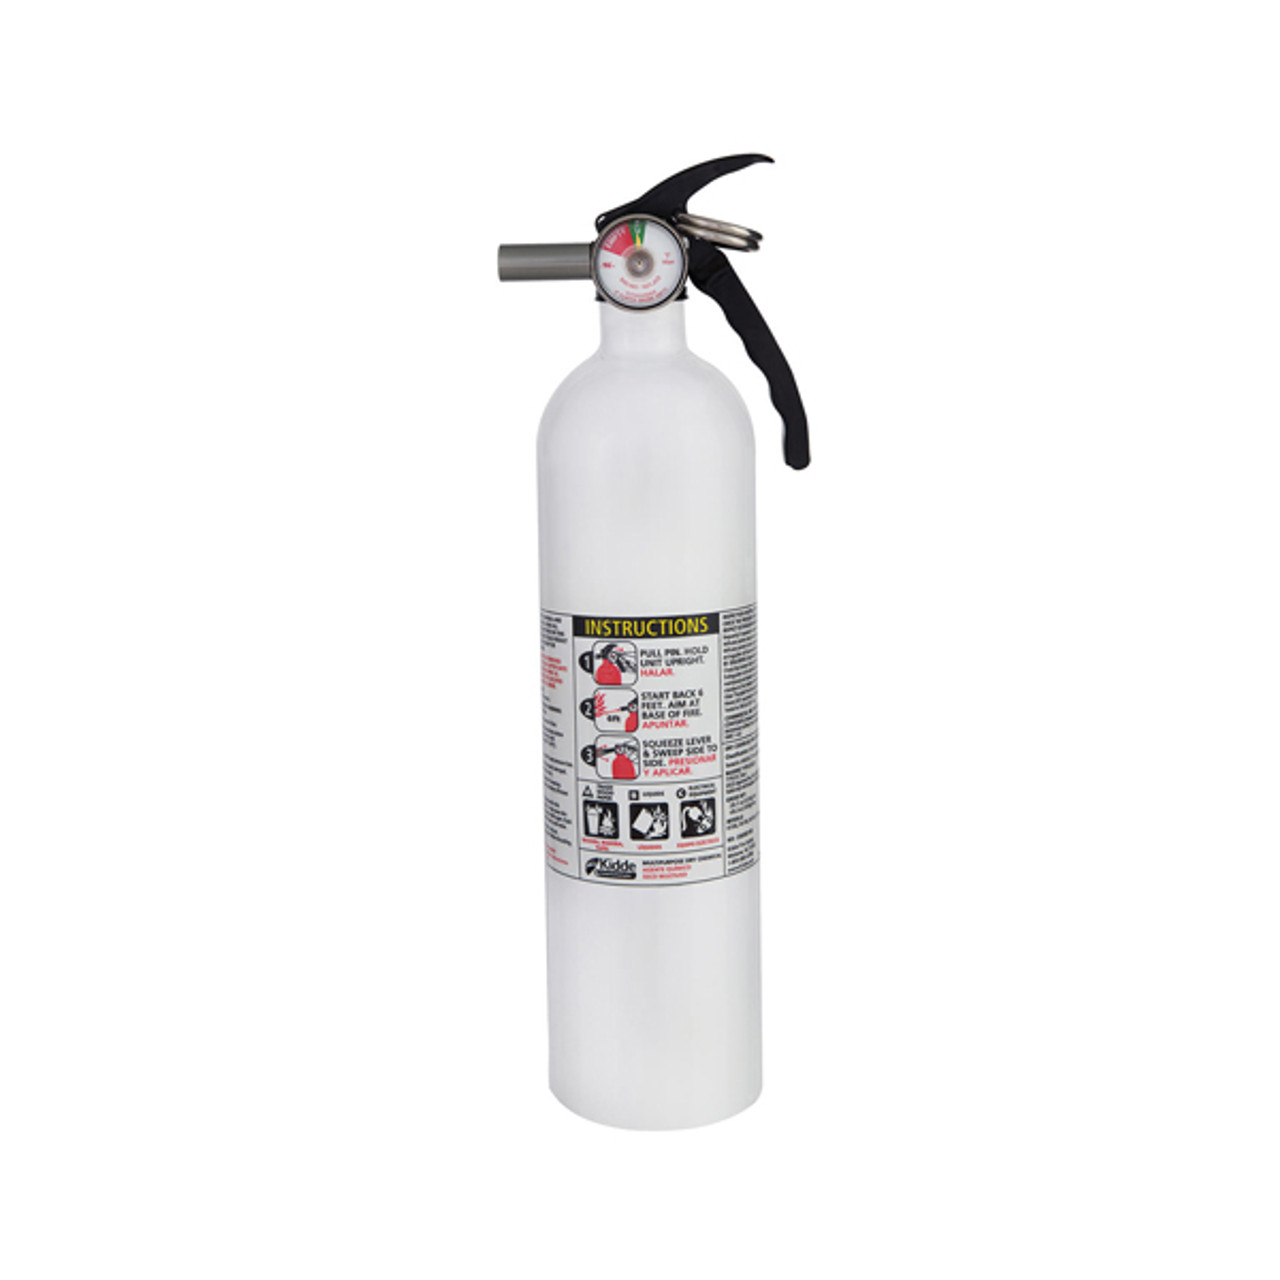 Kidde Mariner 10 BC Portable Fire Extinguisher